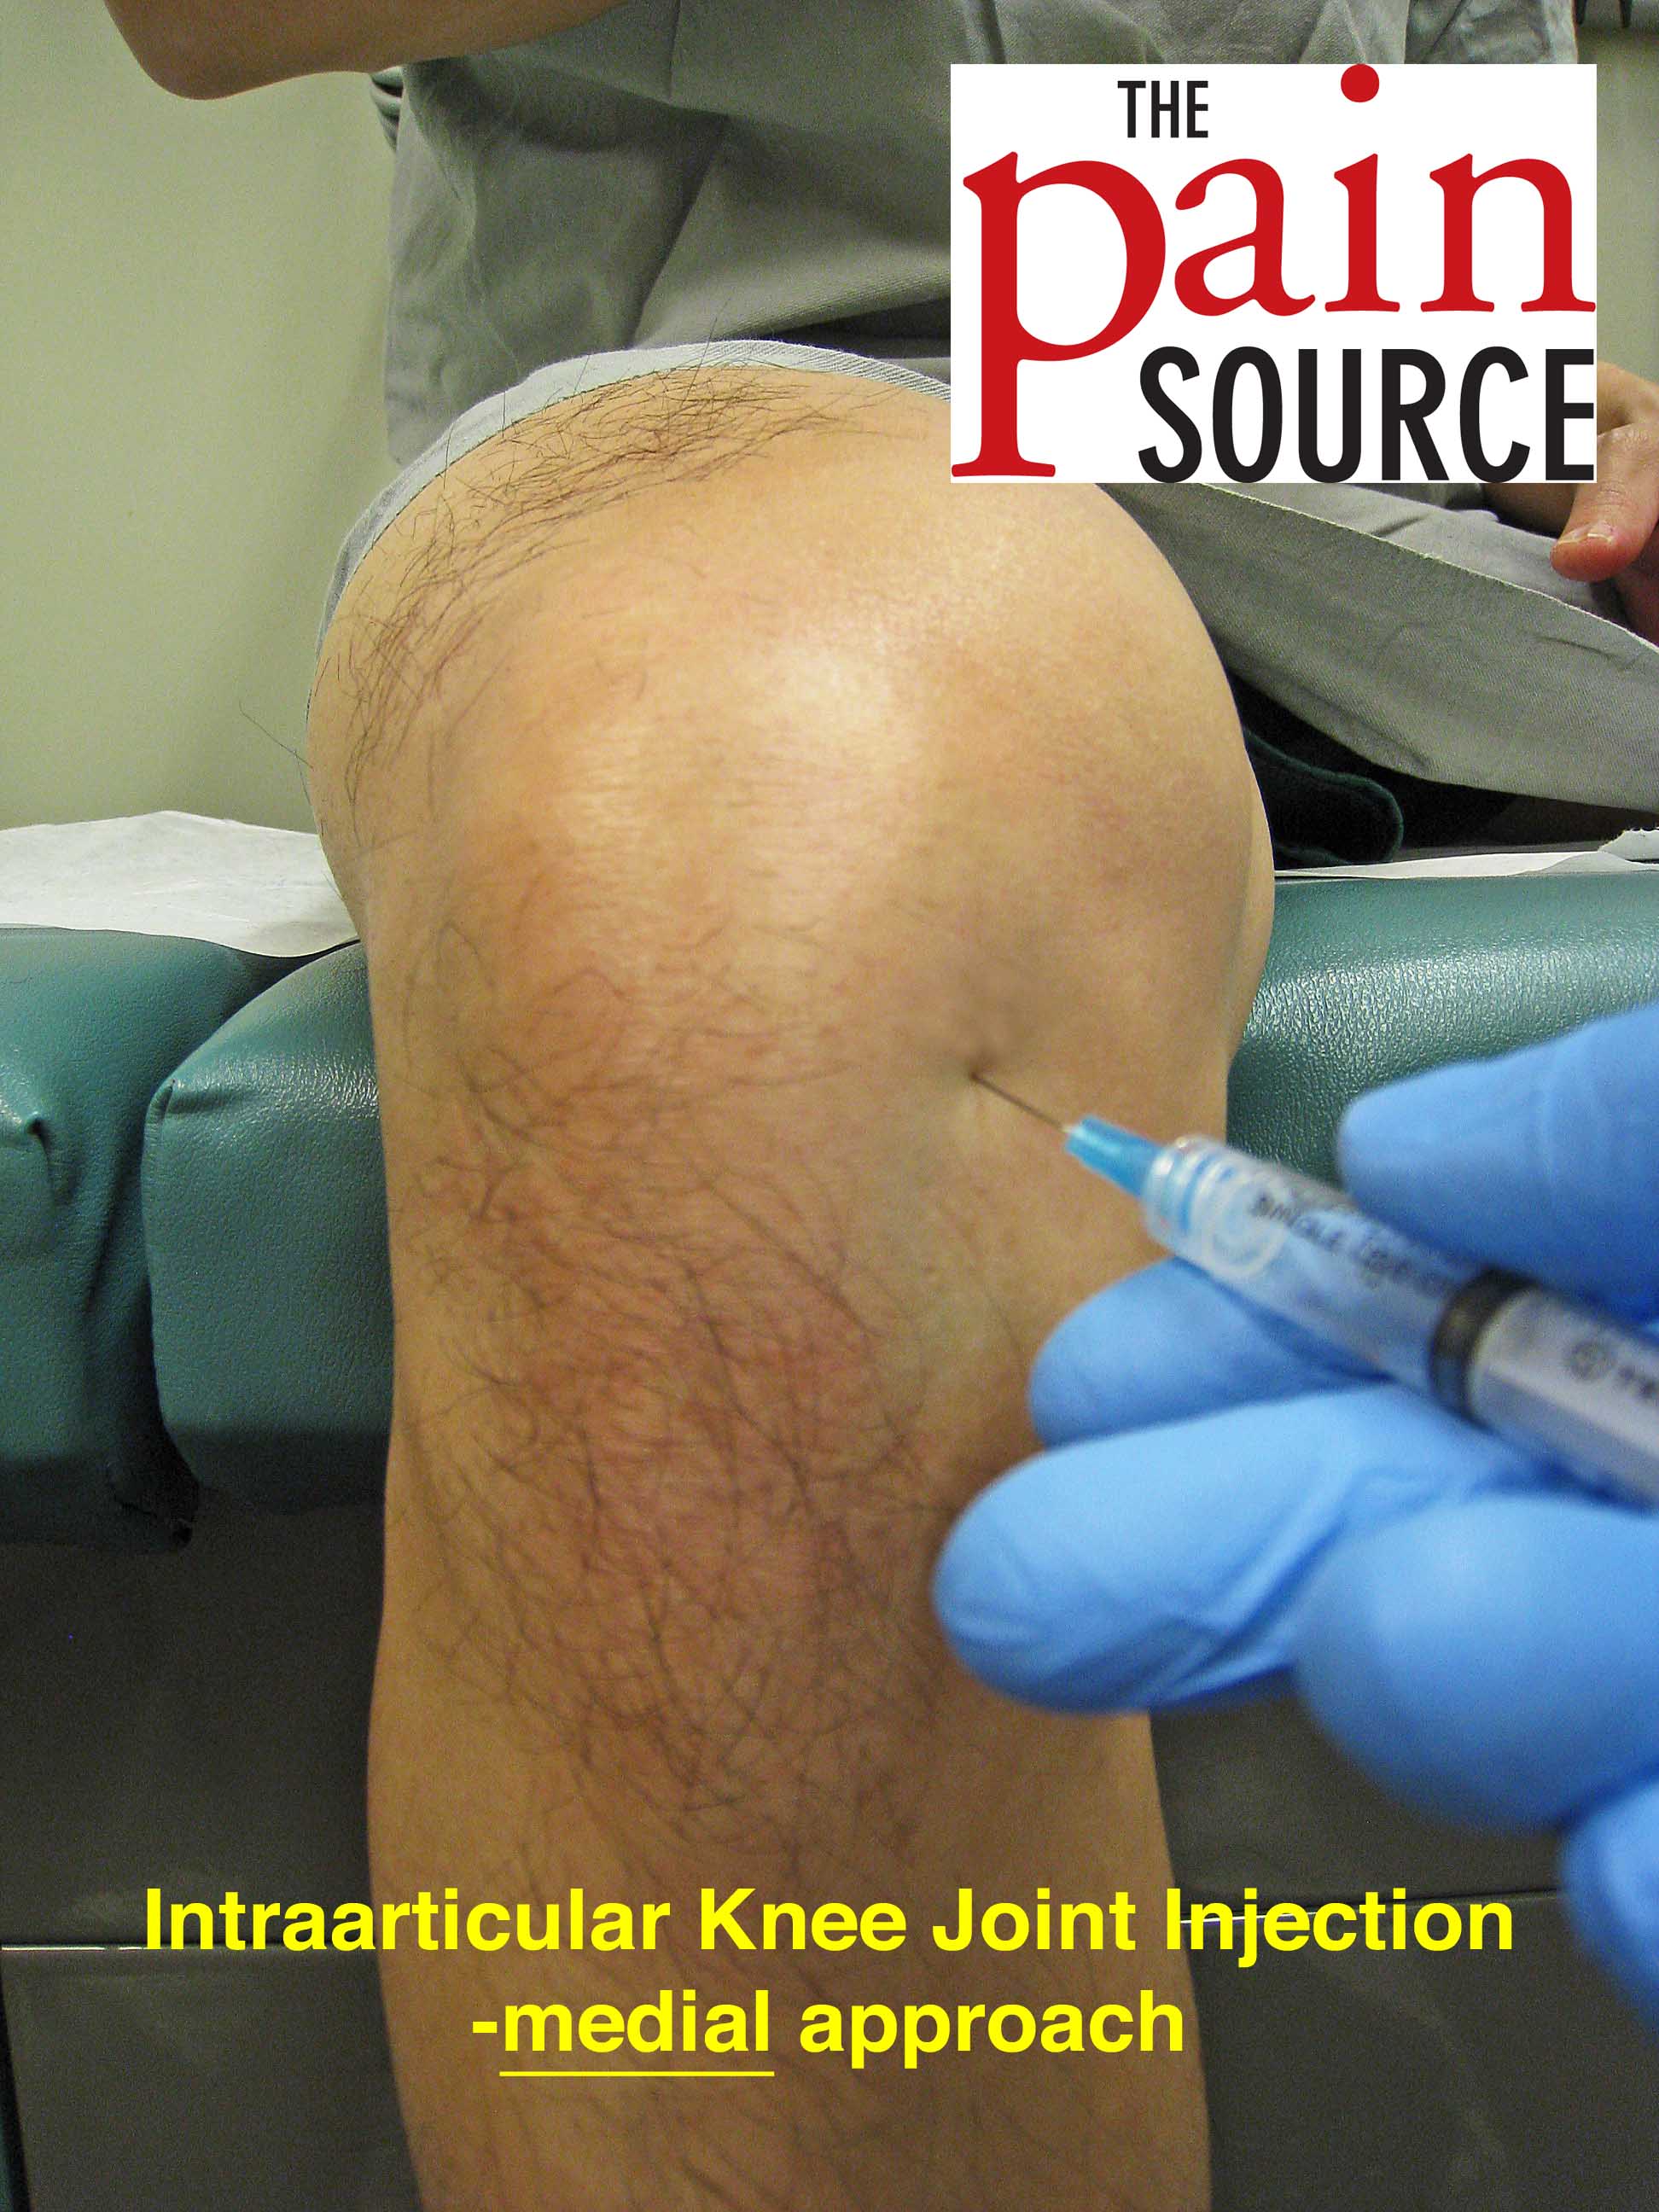 injections sunovial fluid in knee